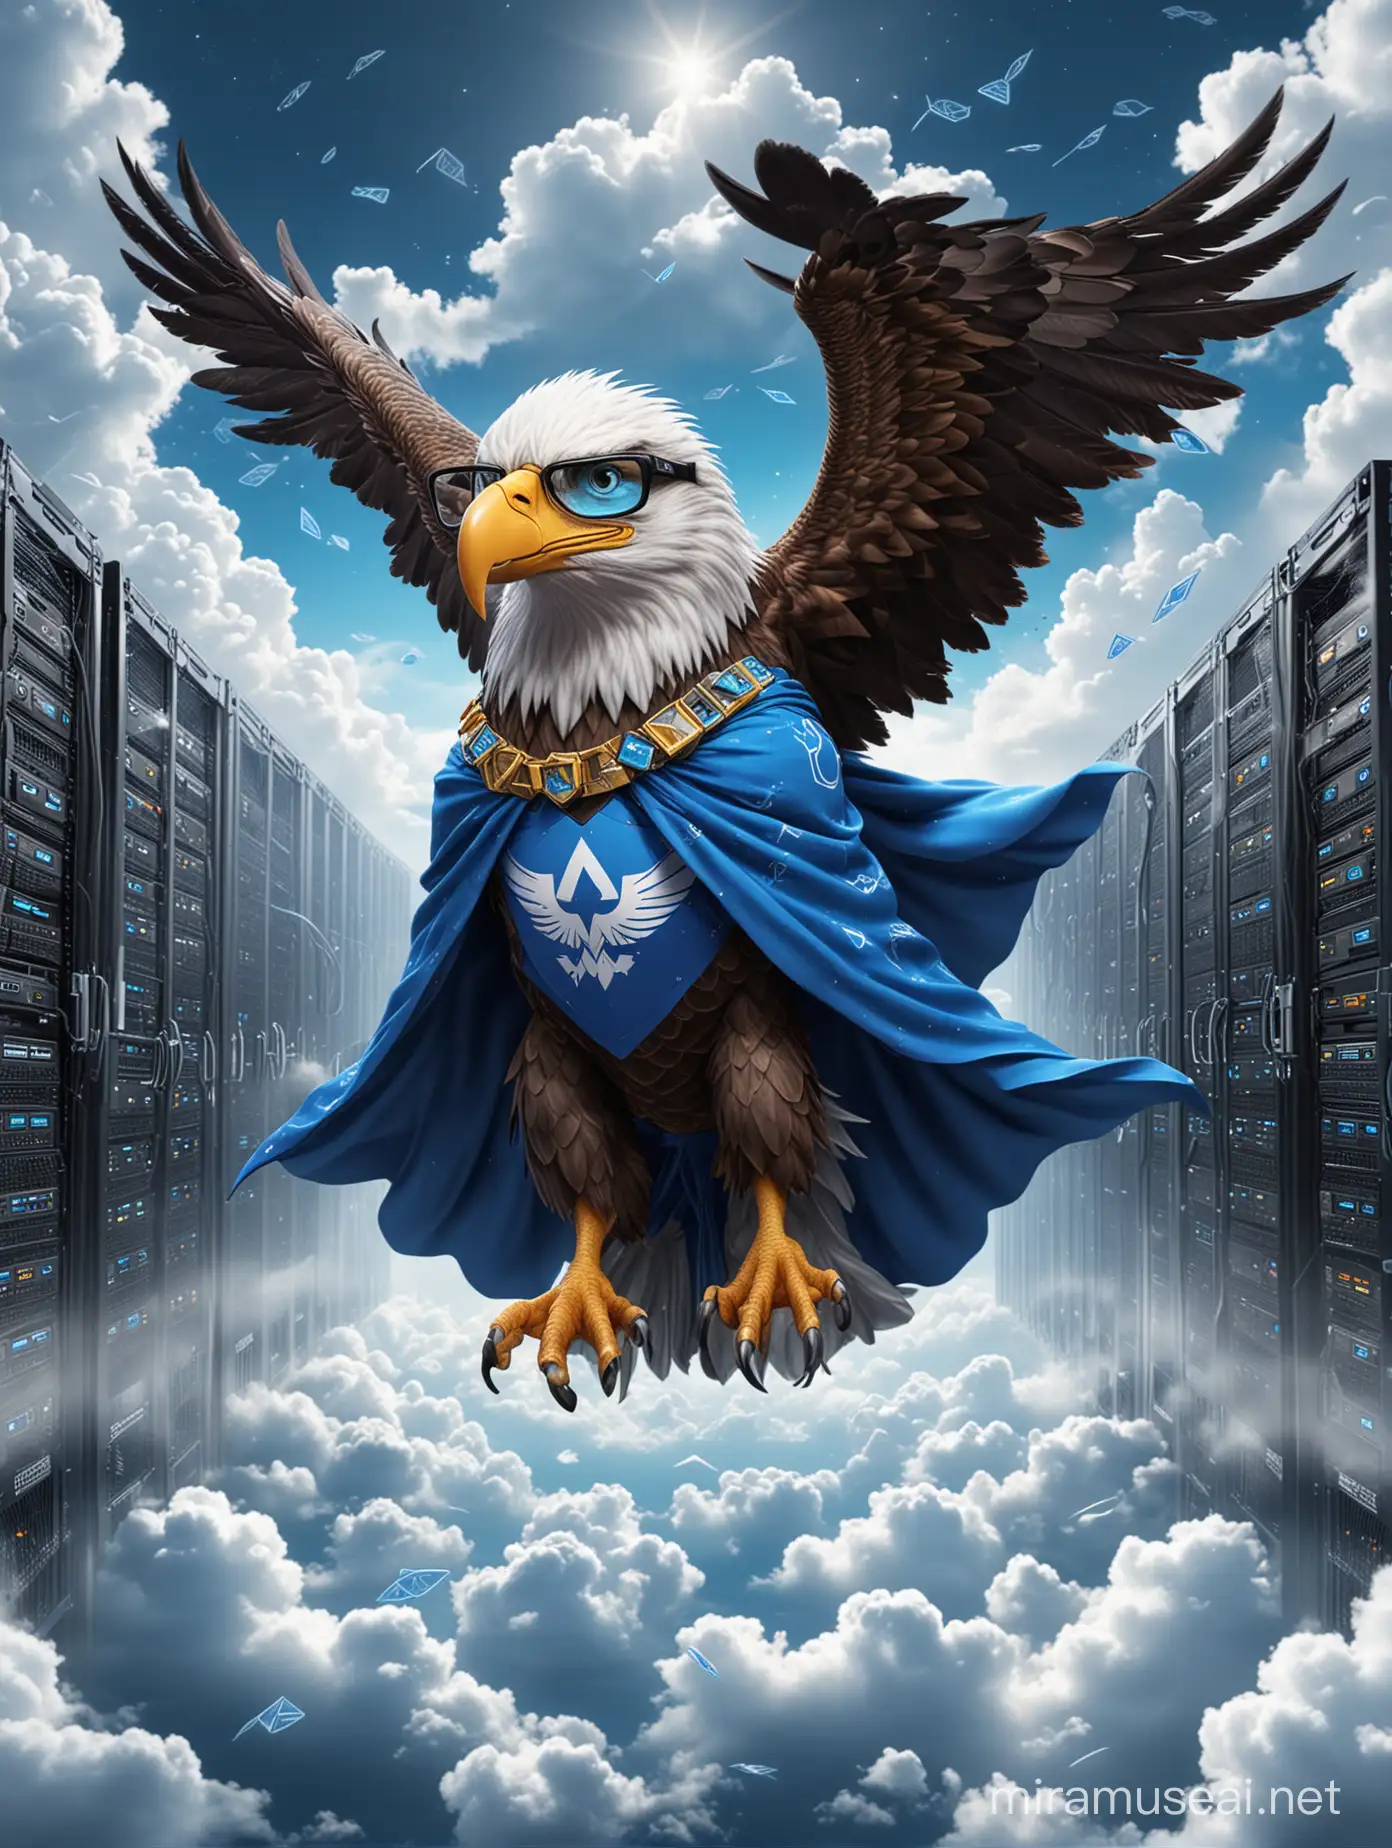 Majestic Eagle Superhero Soars Above CloudKissed Data Centers